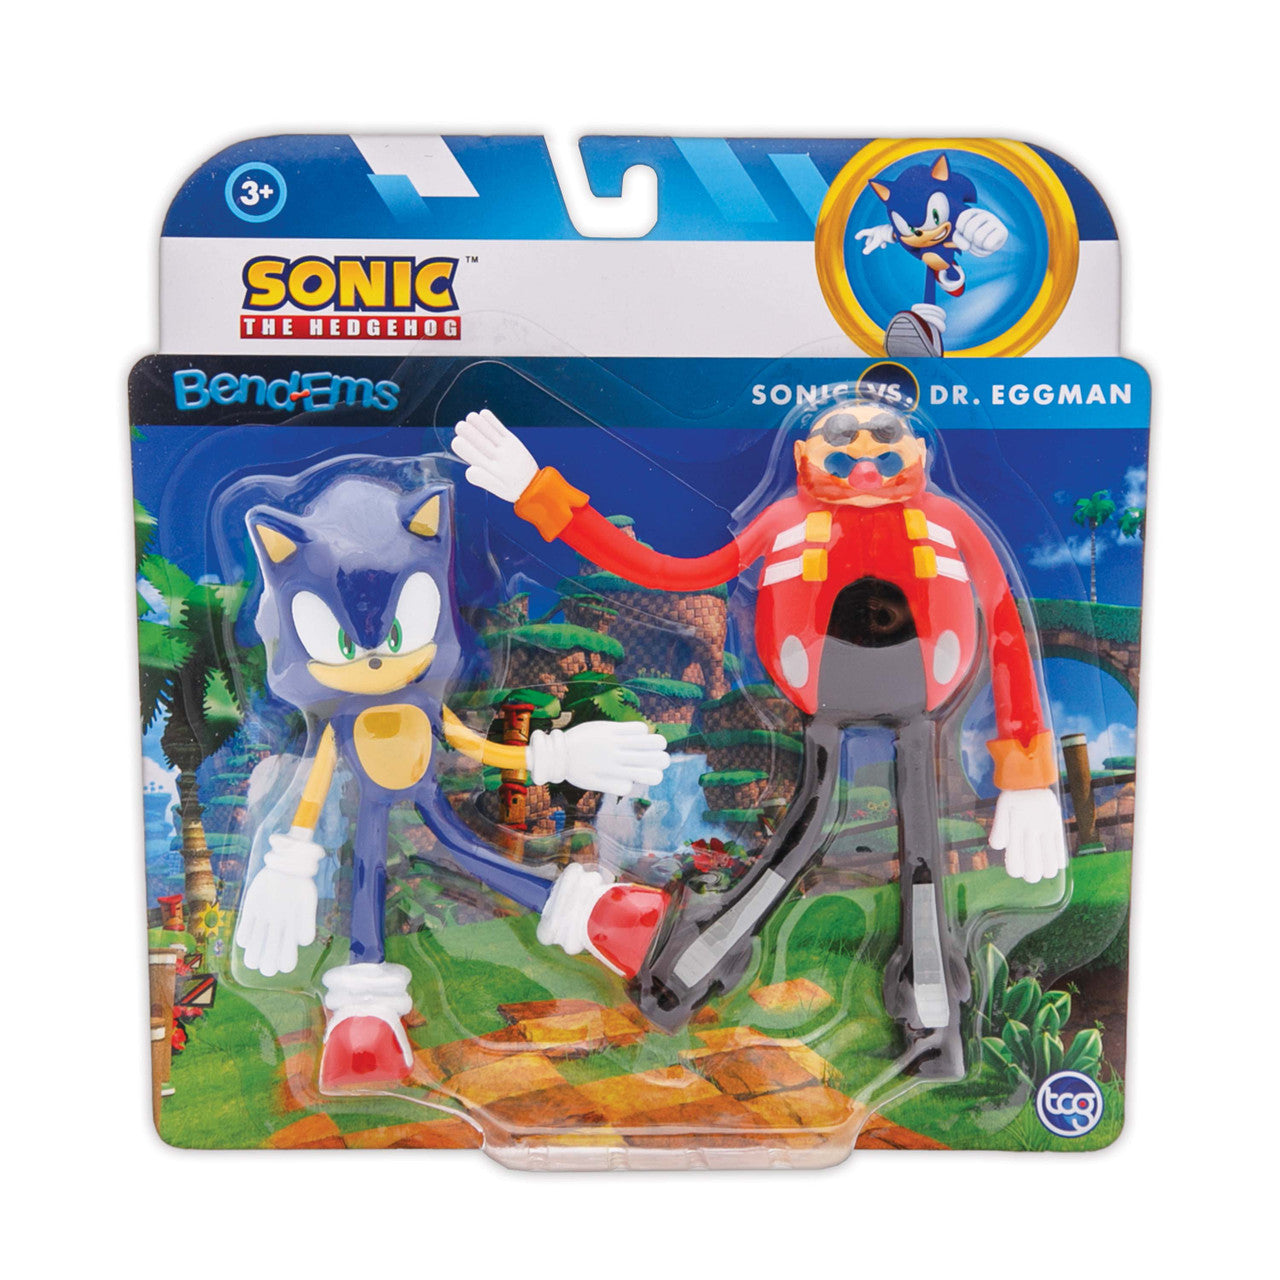 NJ Croce-Bend-Ems Sonic Vs. Dr. Eggman Pair-55152-Legacy Toys